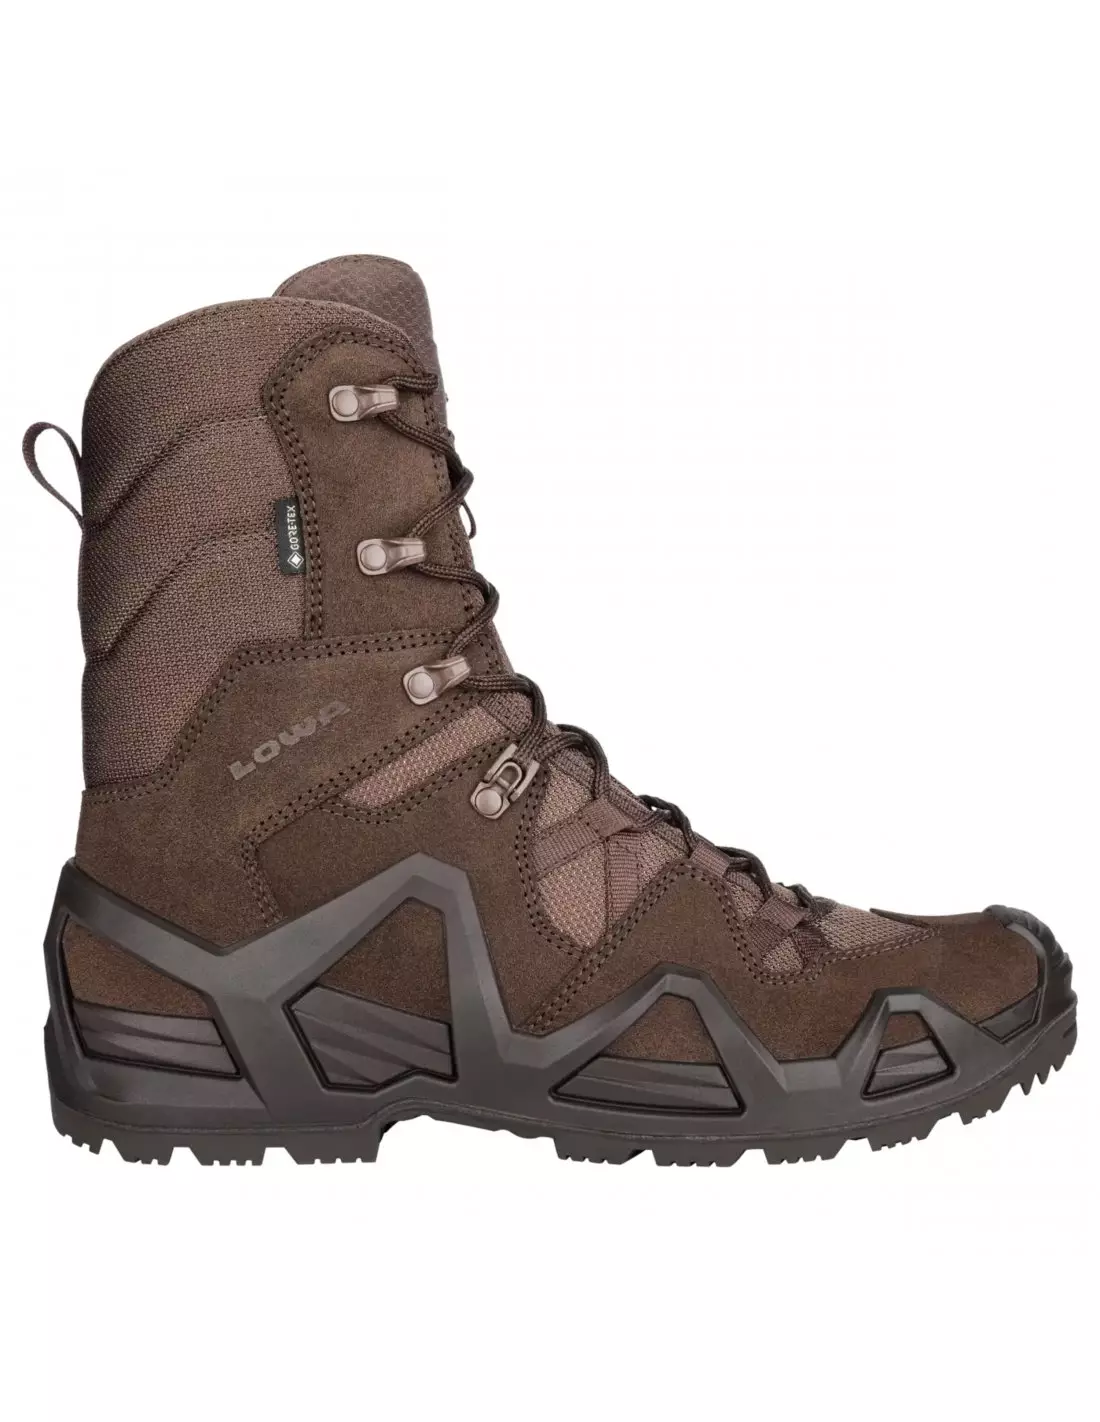 LOWA® ZEPHYR MK2 GTX HI Tactical Boots - Dark Brown